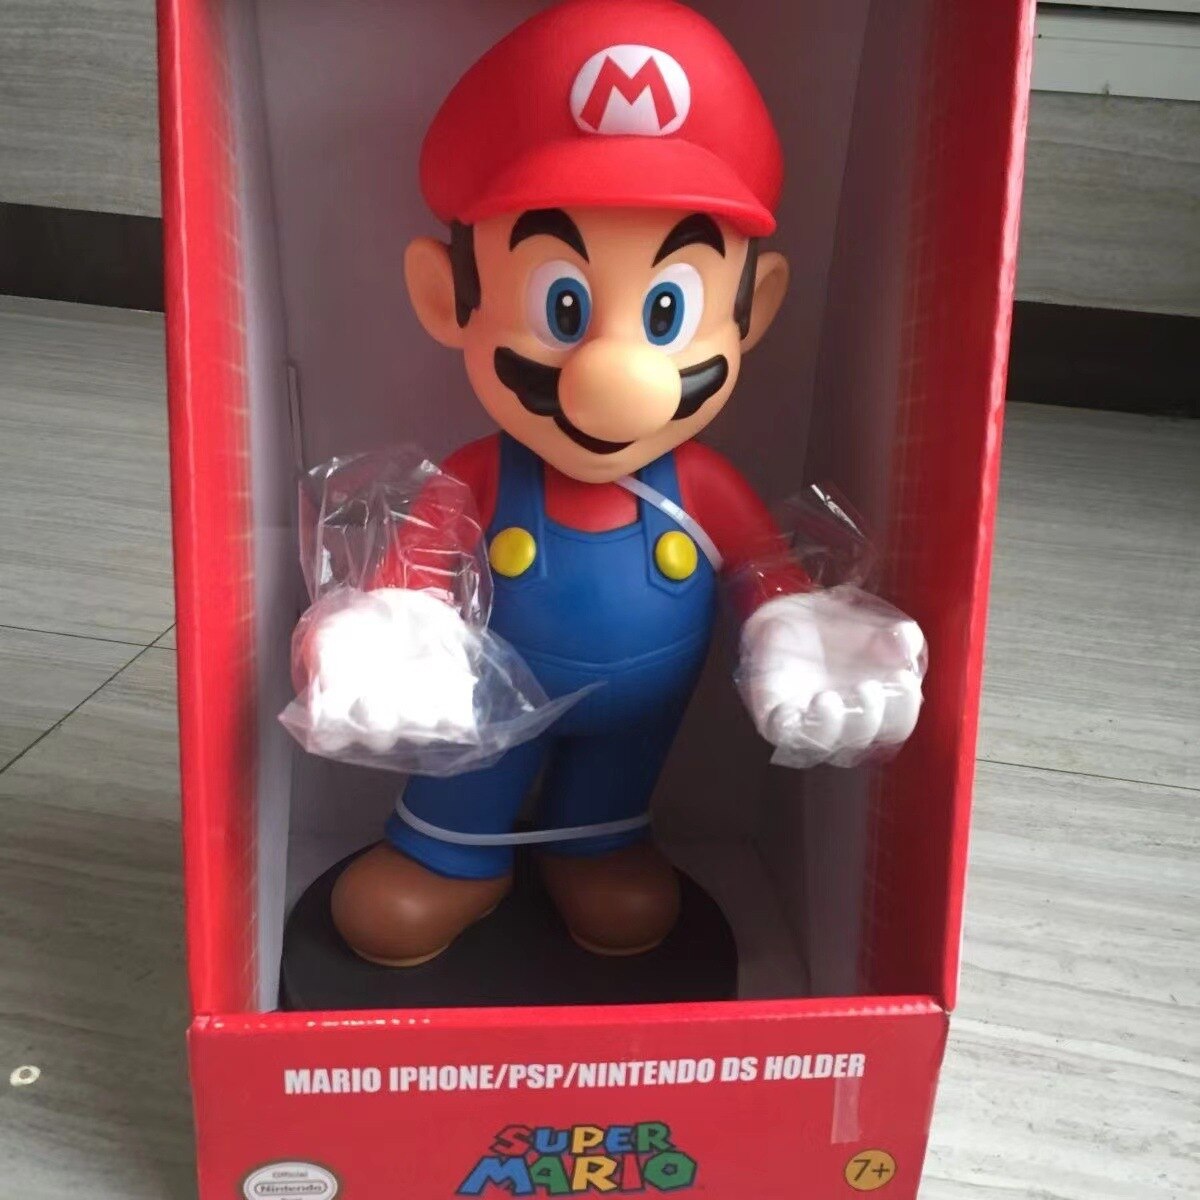 Super Marios Action Figure Phone or remote holder